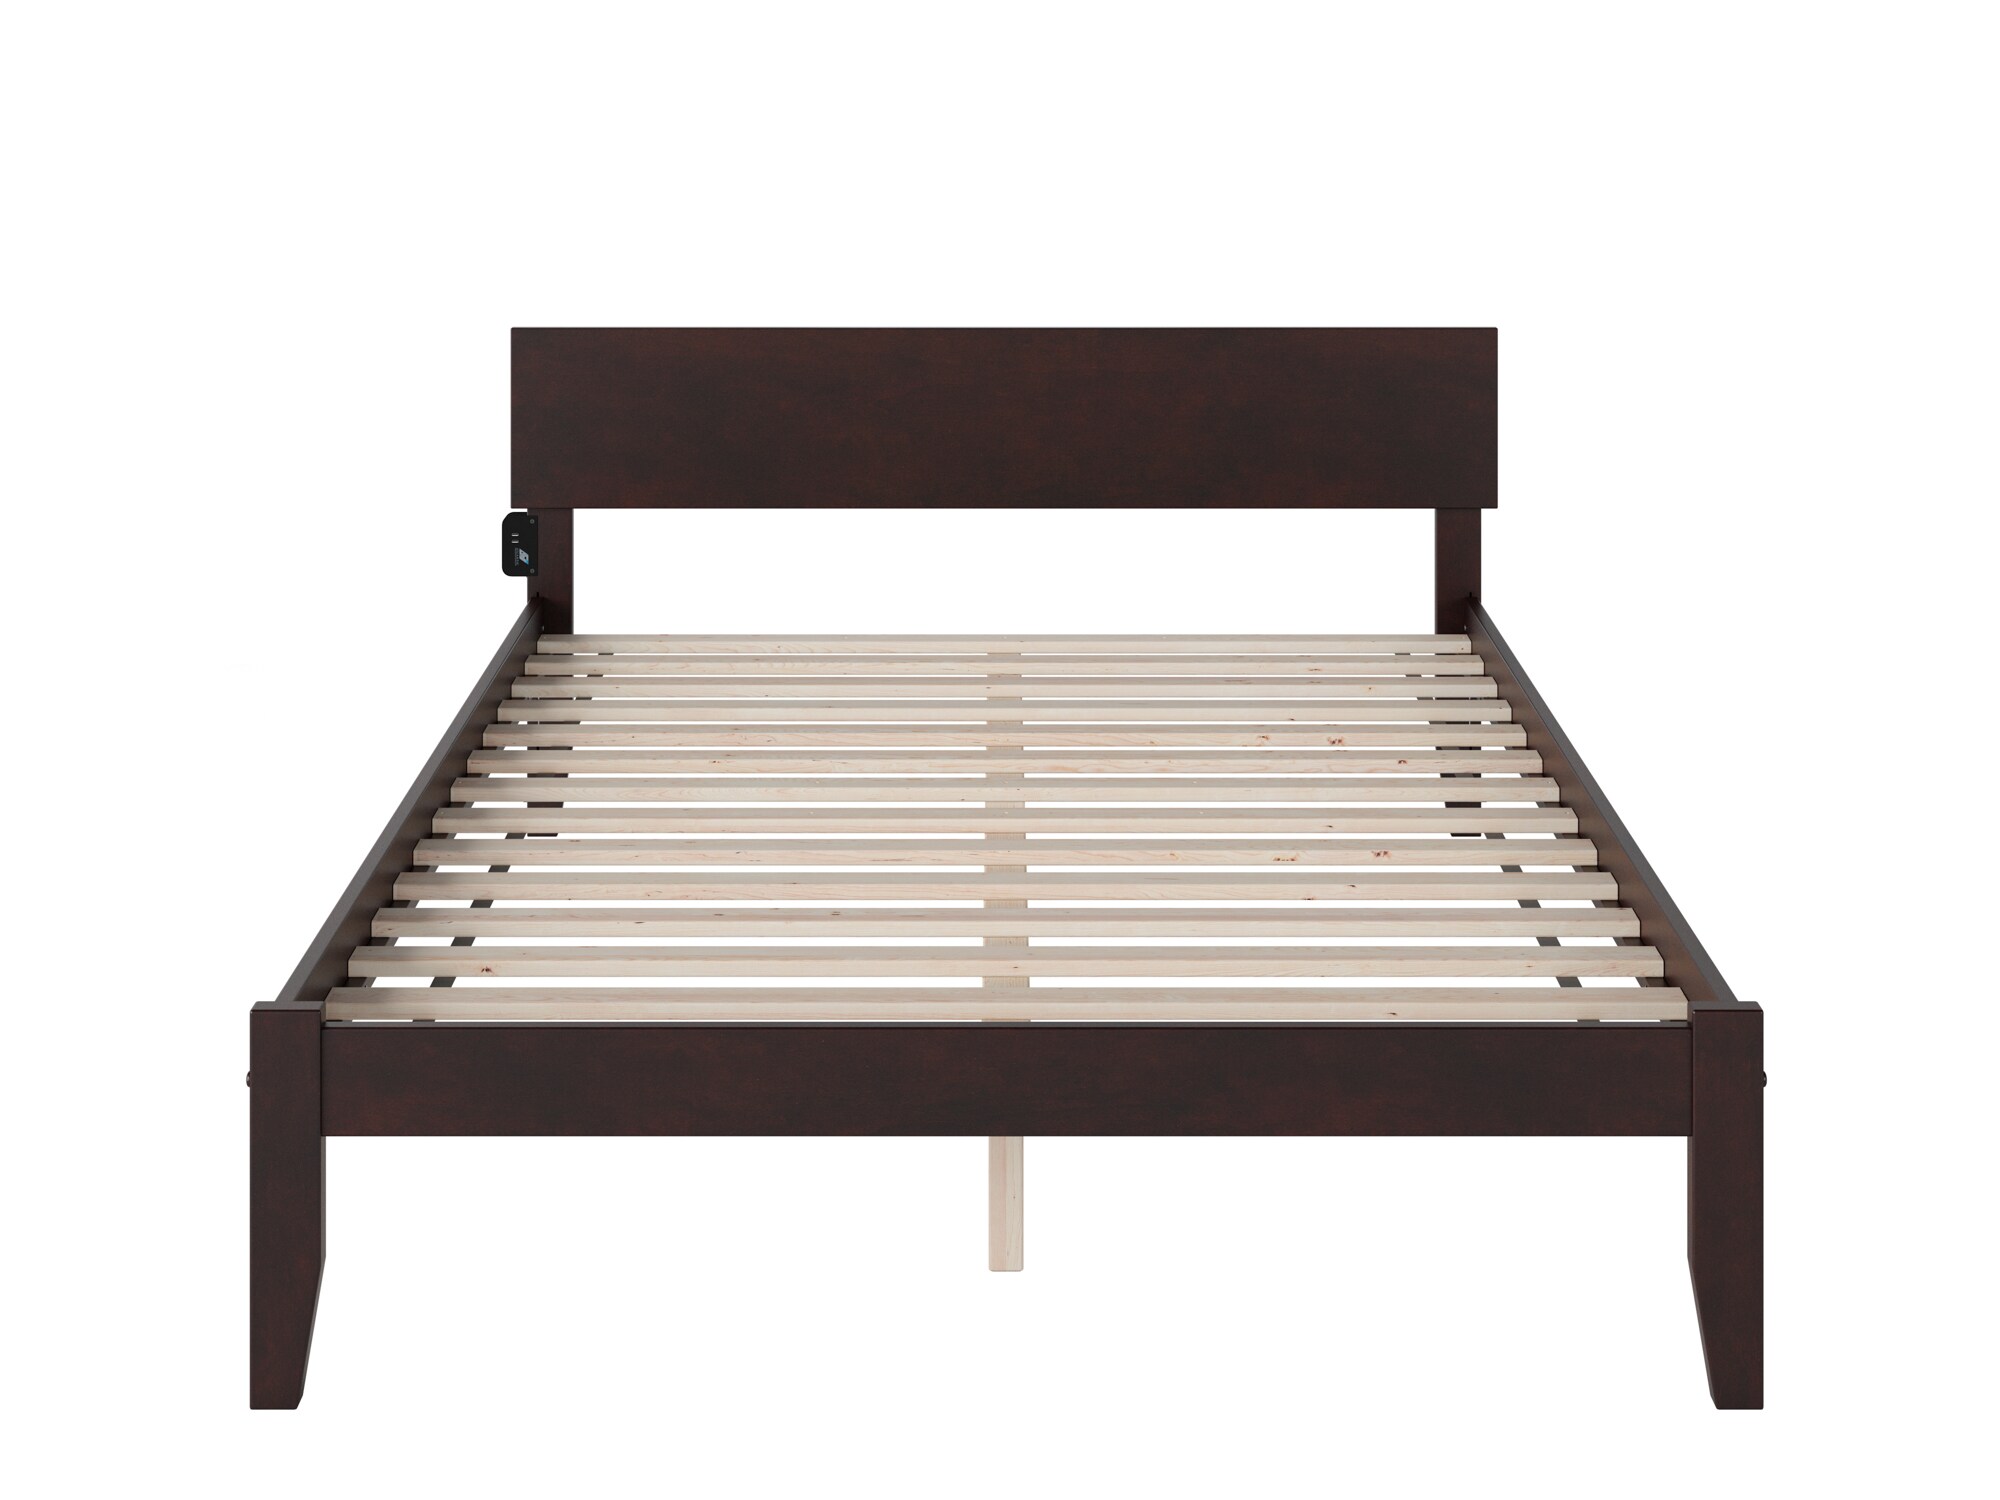 AFI Furnishings Orlando Espresso King Wood Platform Bed at Lowes.com